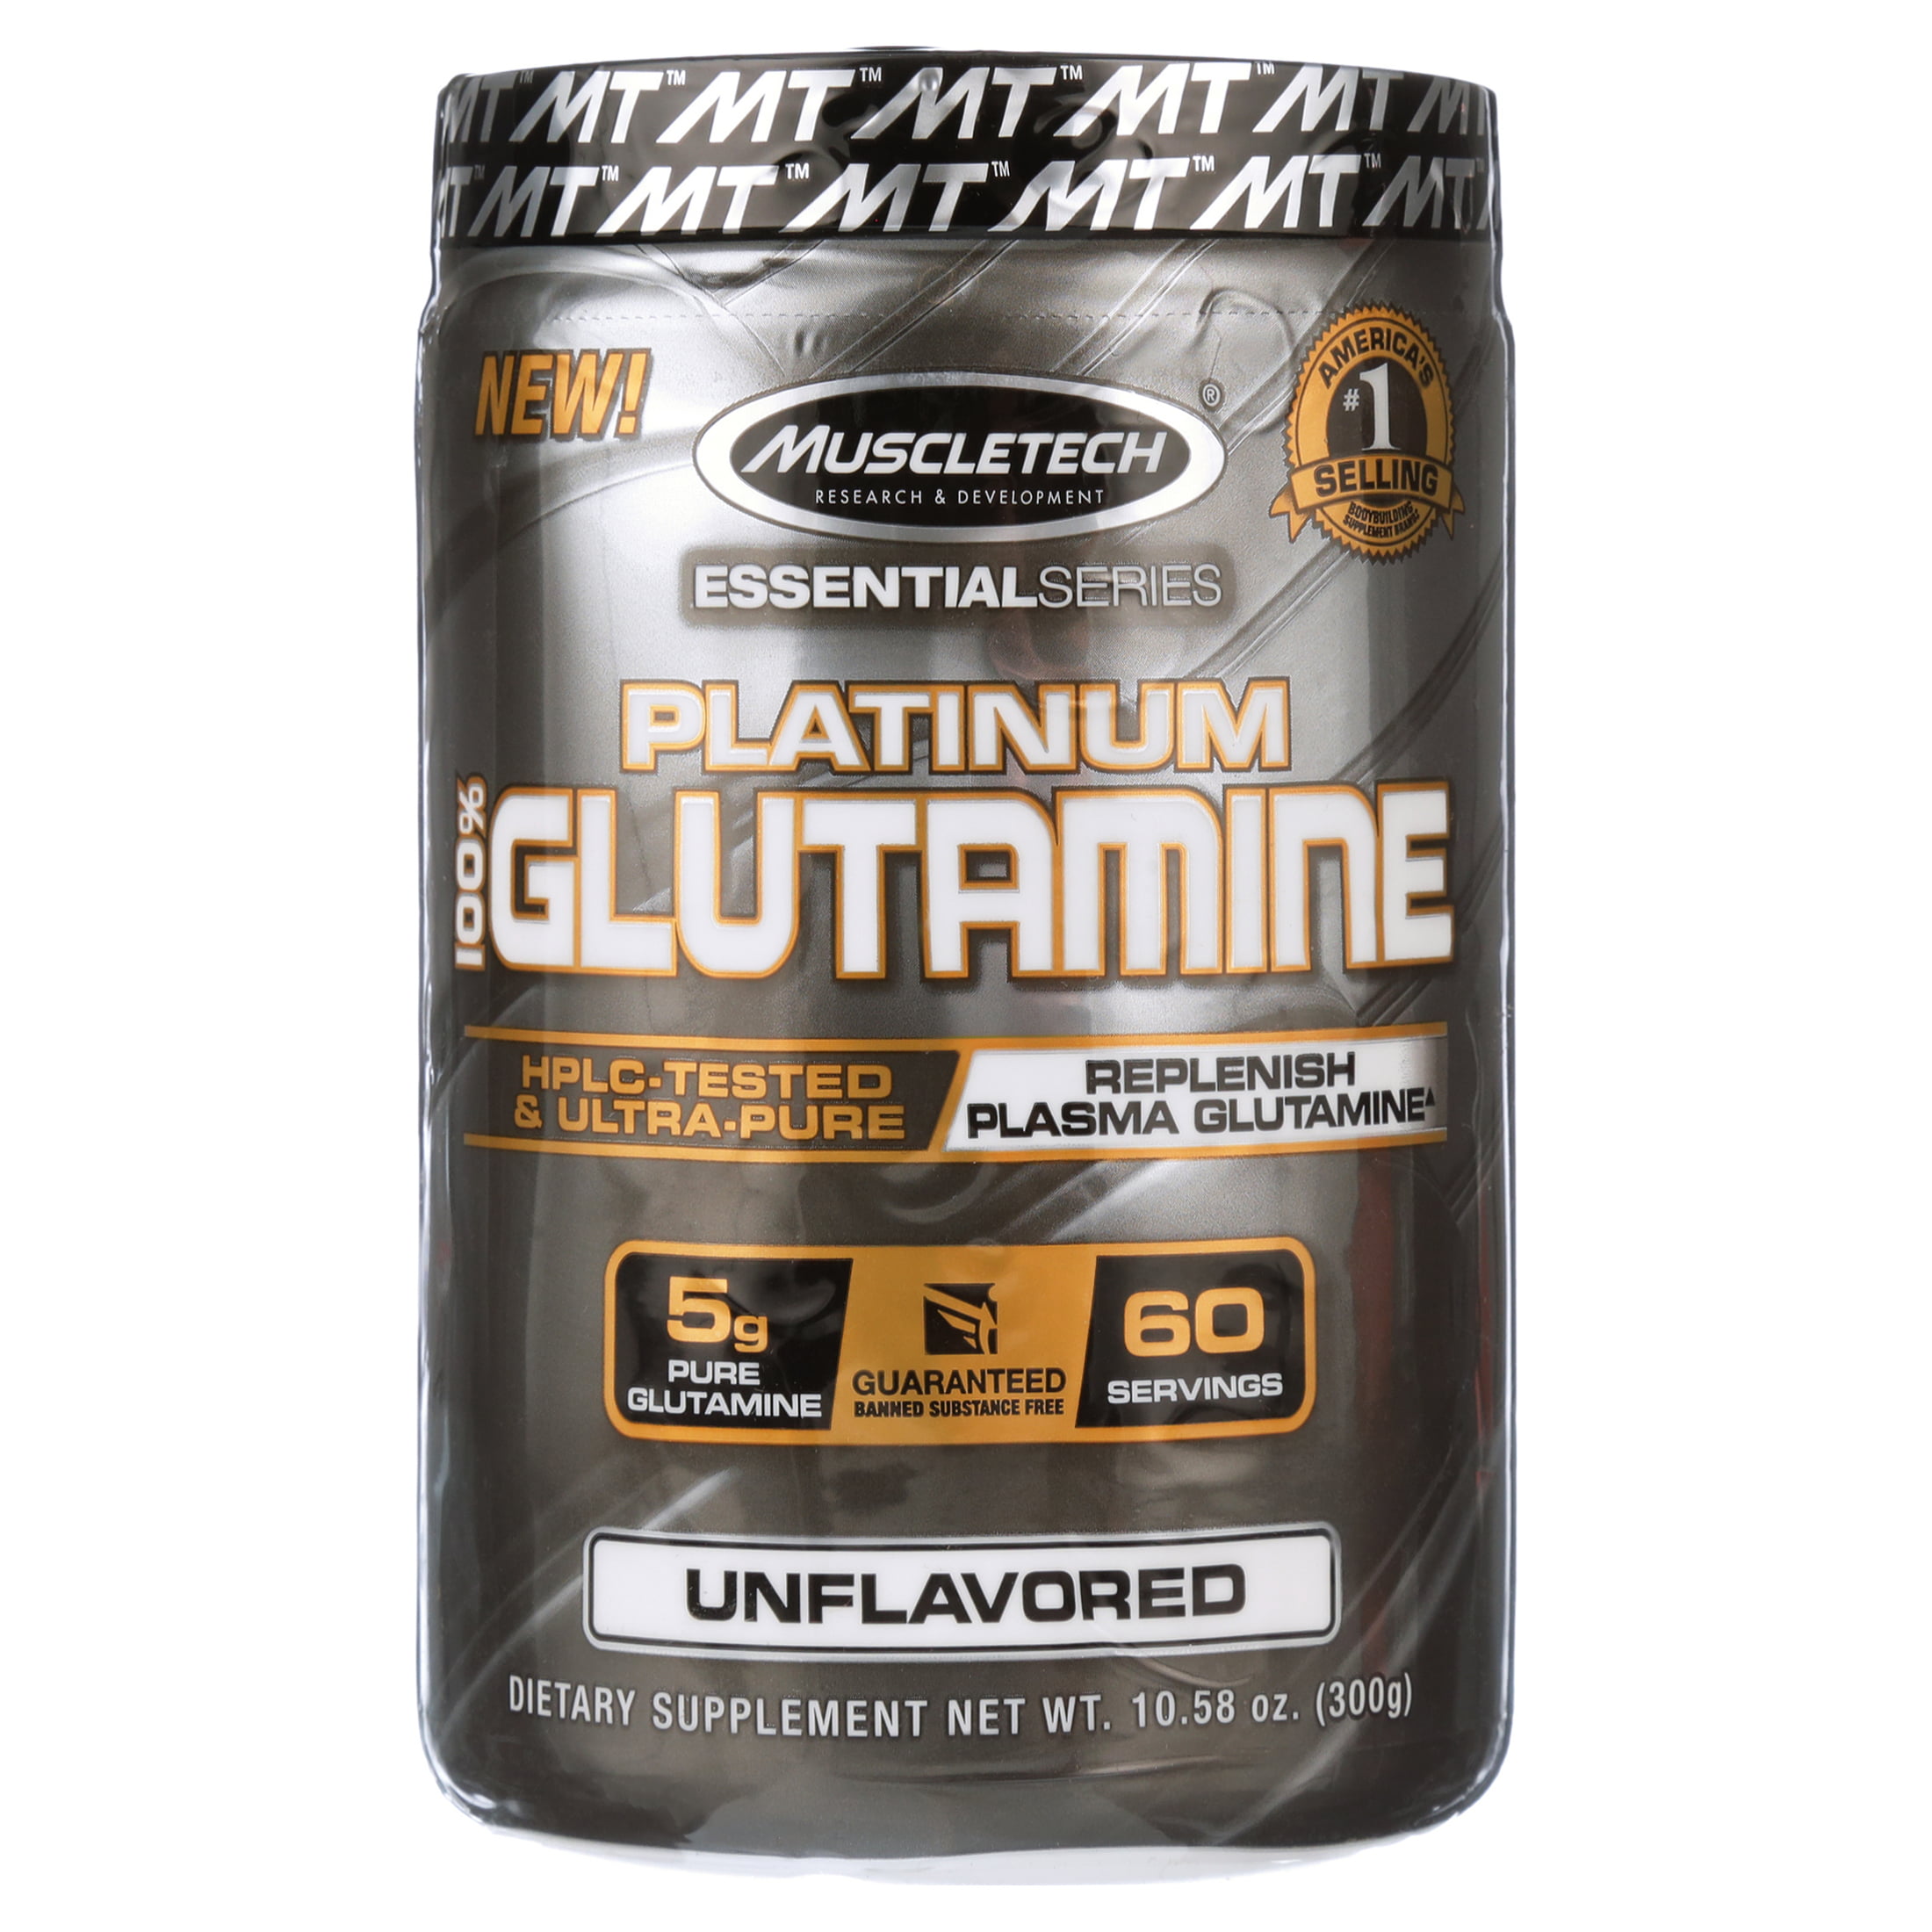 MuscleTech Platinum Glutamine Powder - 60 Servings